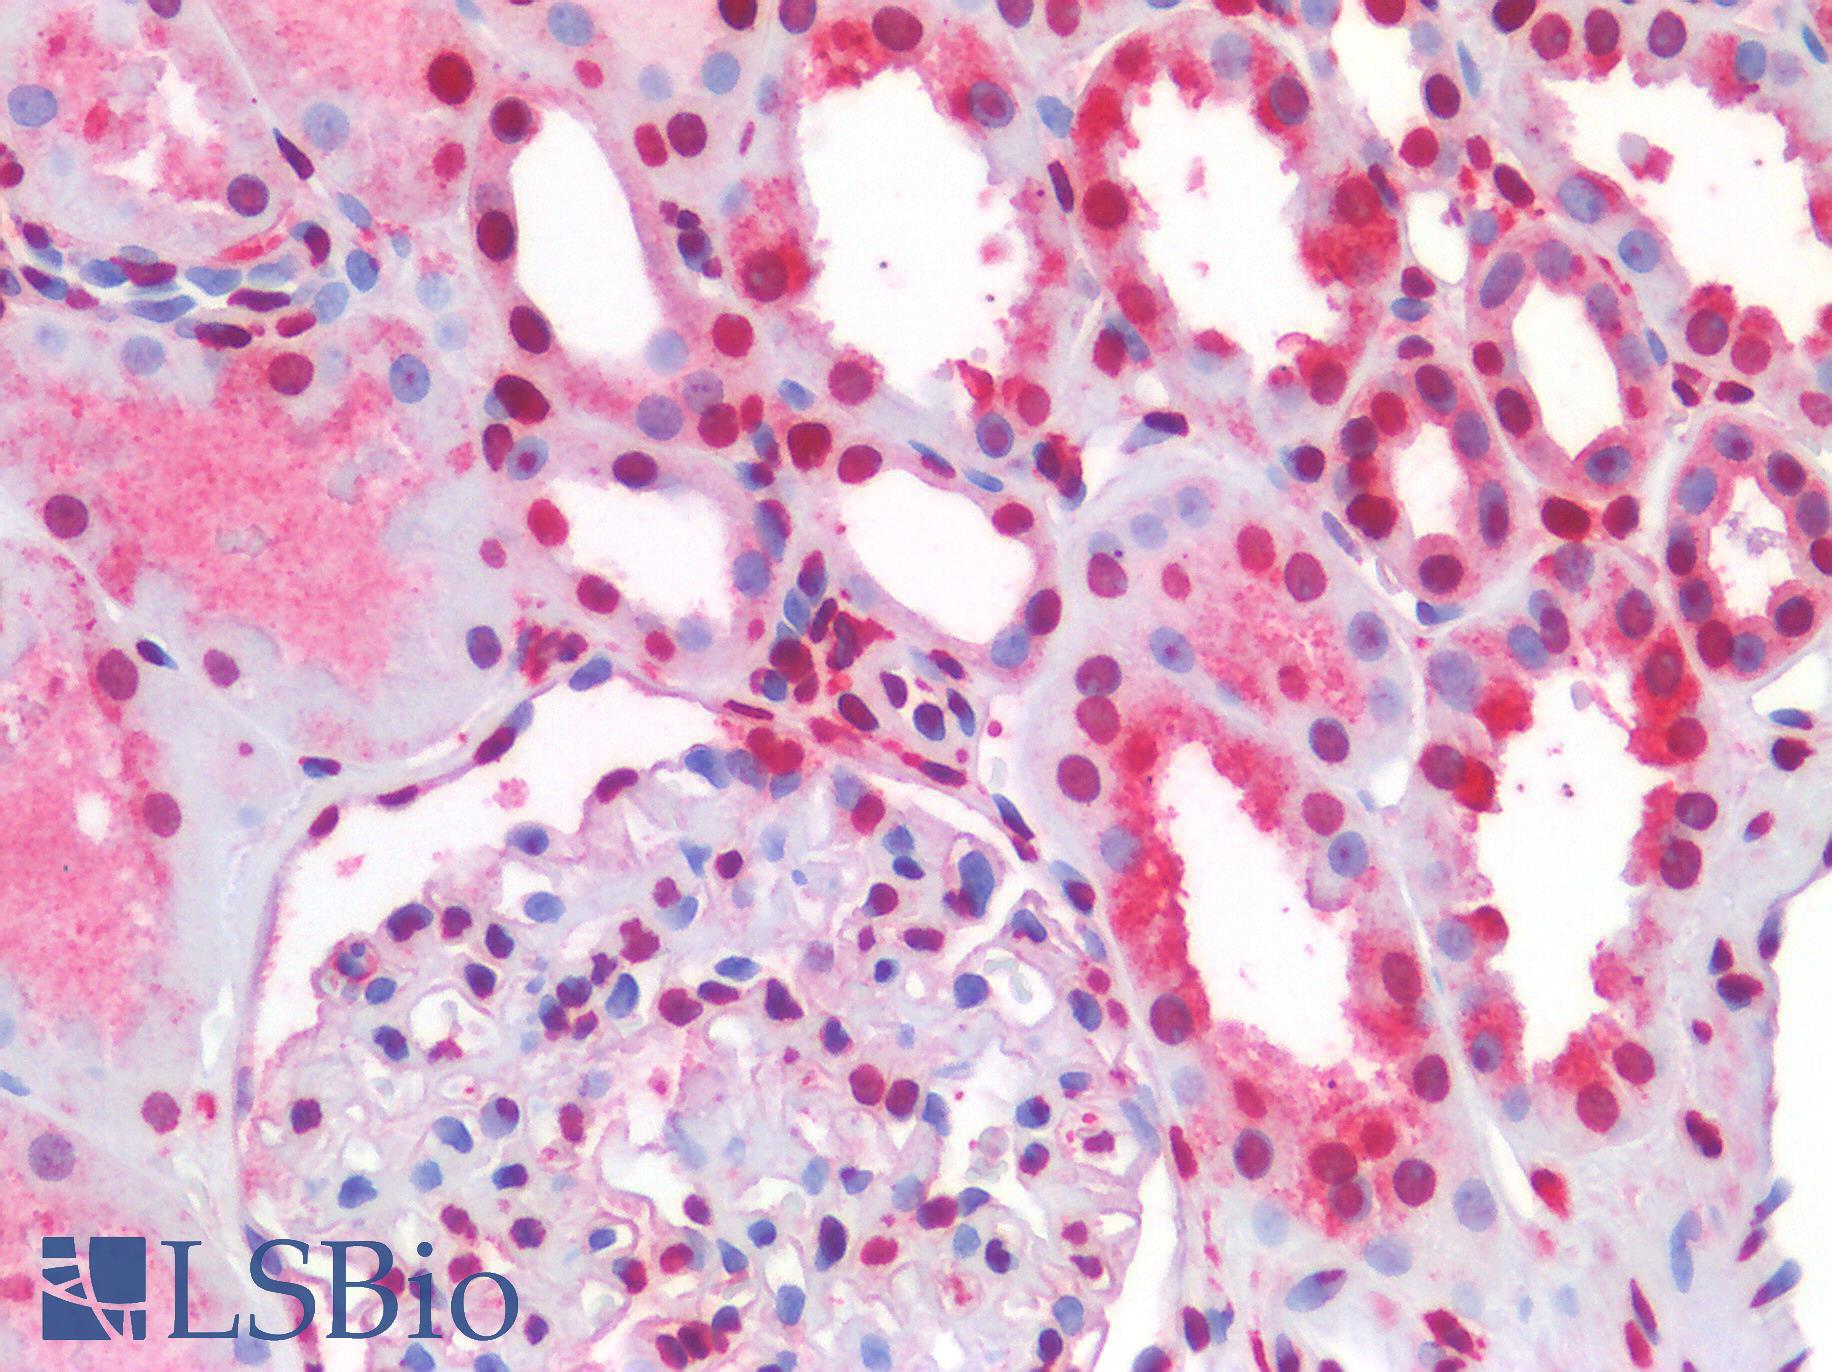 NALP3 / NLRP3 Antibody - Human Kidney: Formalin-Fixed, Paraffin-Embedded (FFPE)